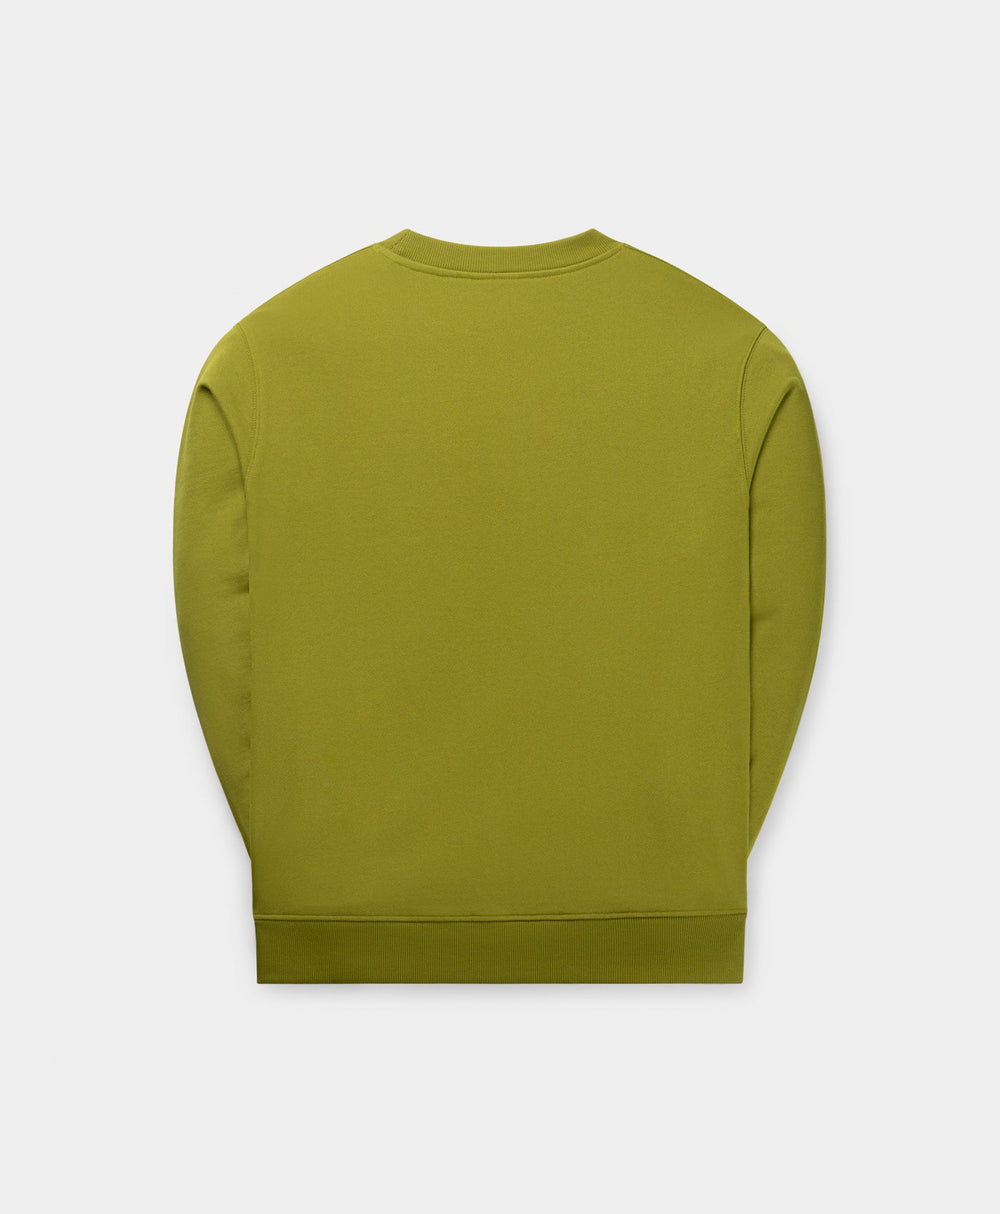 DP - Cardamom Green Orbit Sweater - Packshot - rear